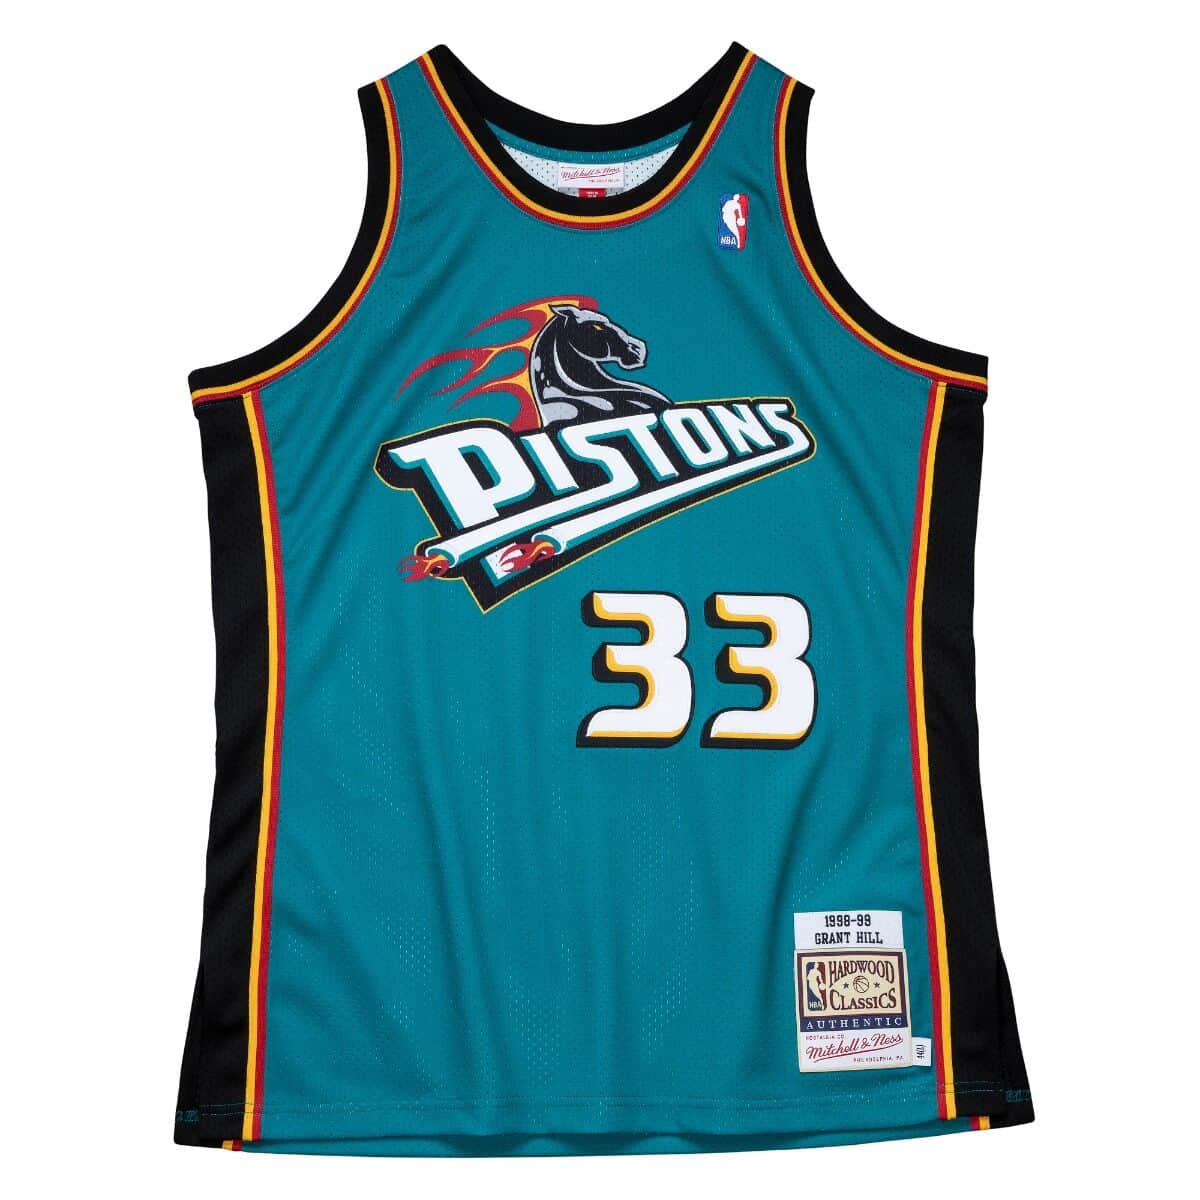 Grant Hill Detroit Pistons 1998-99 Jersey